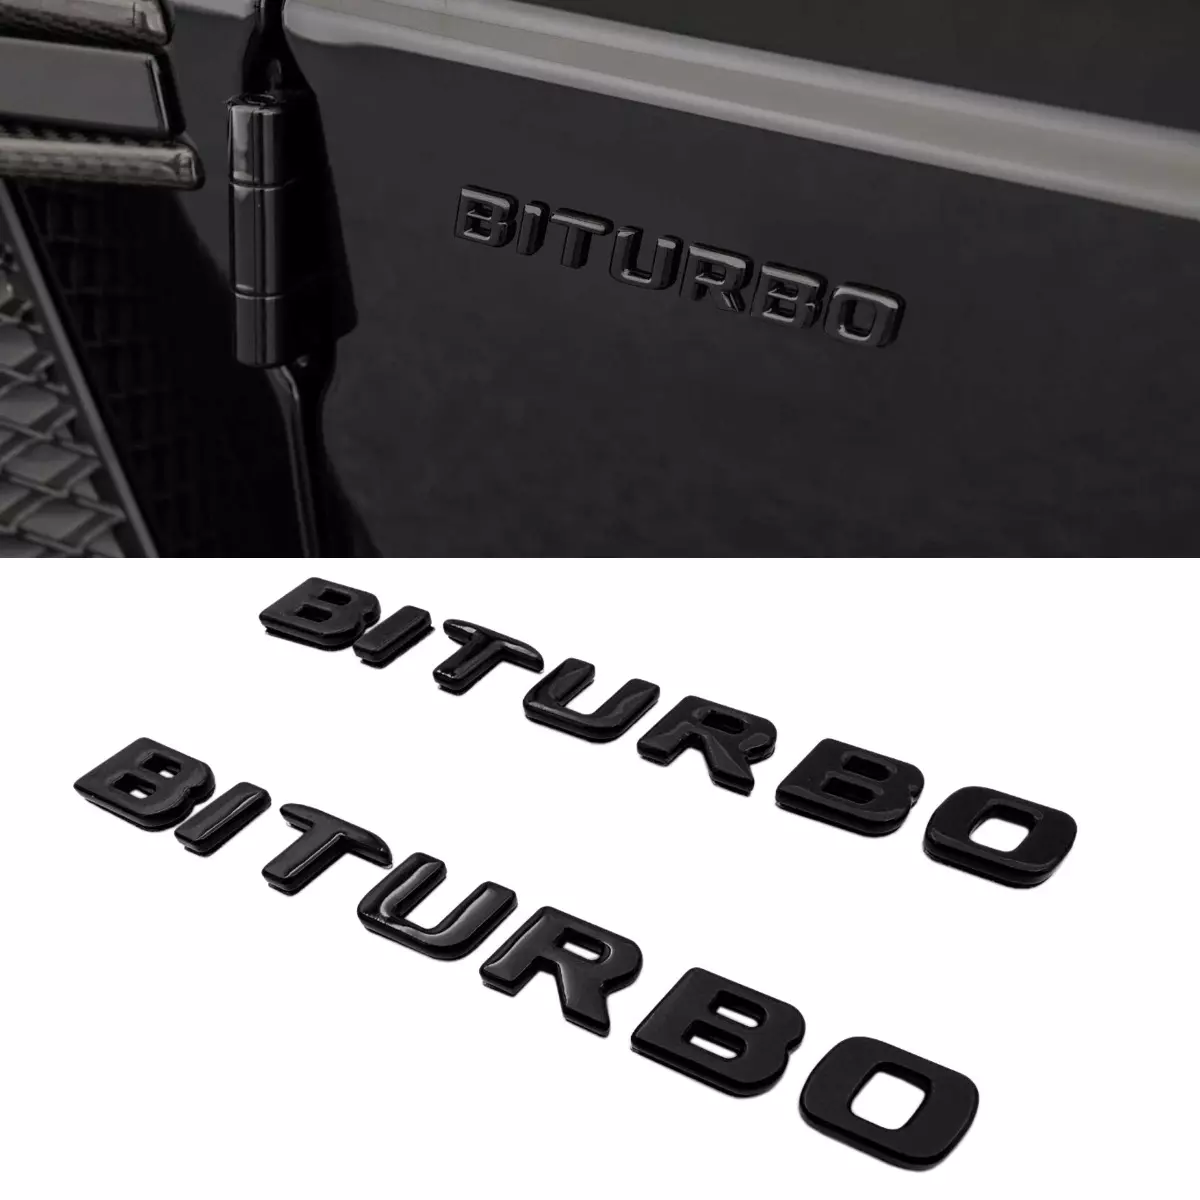 Biturbo Fender Emblems Badges Set for Mercedes S E C G GT Brabus